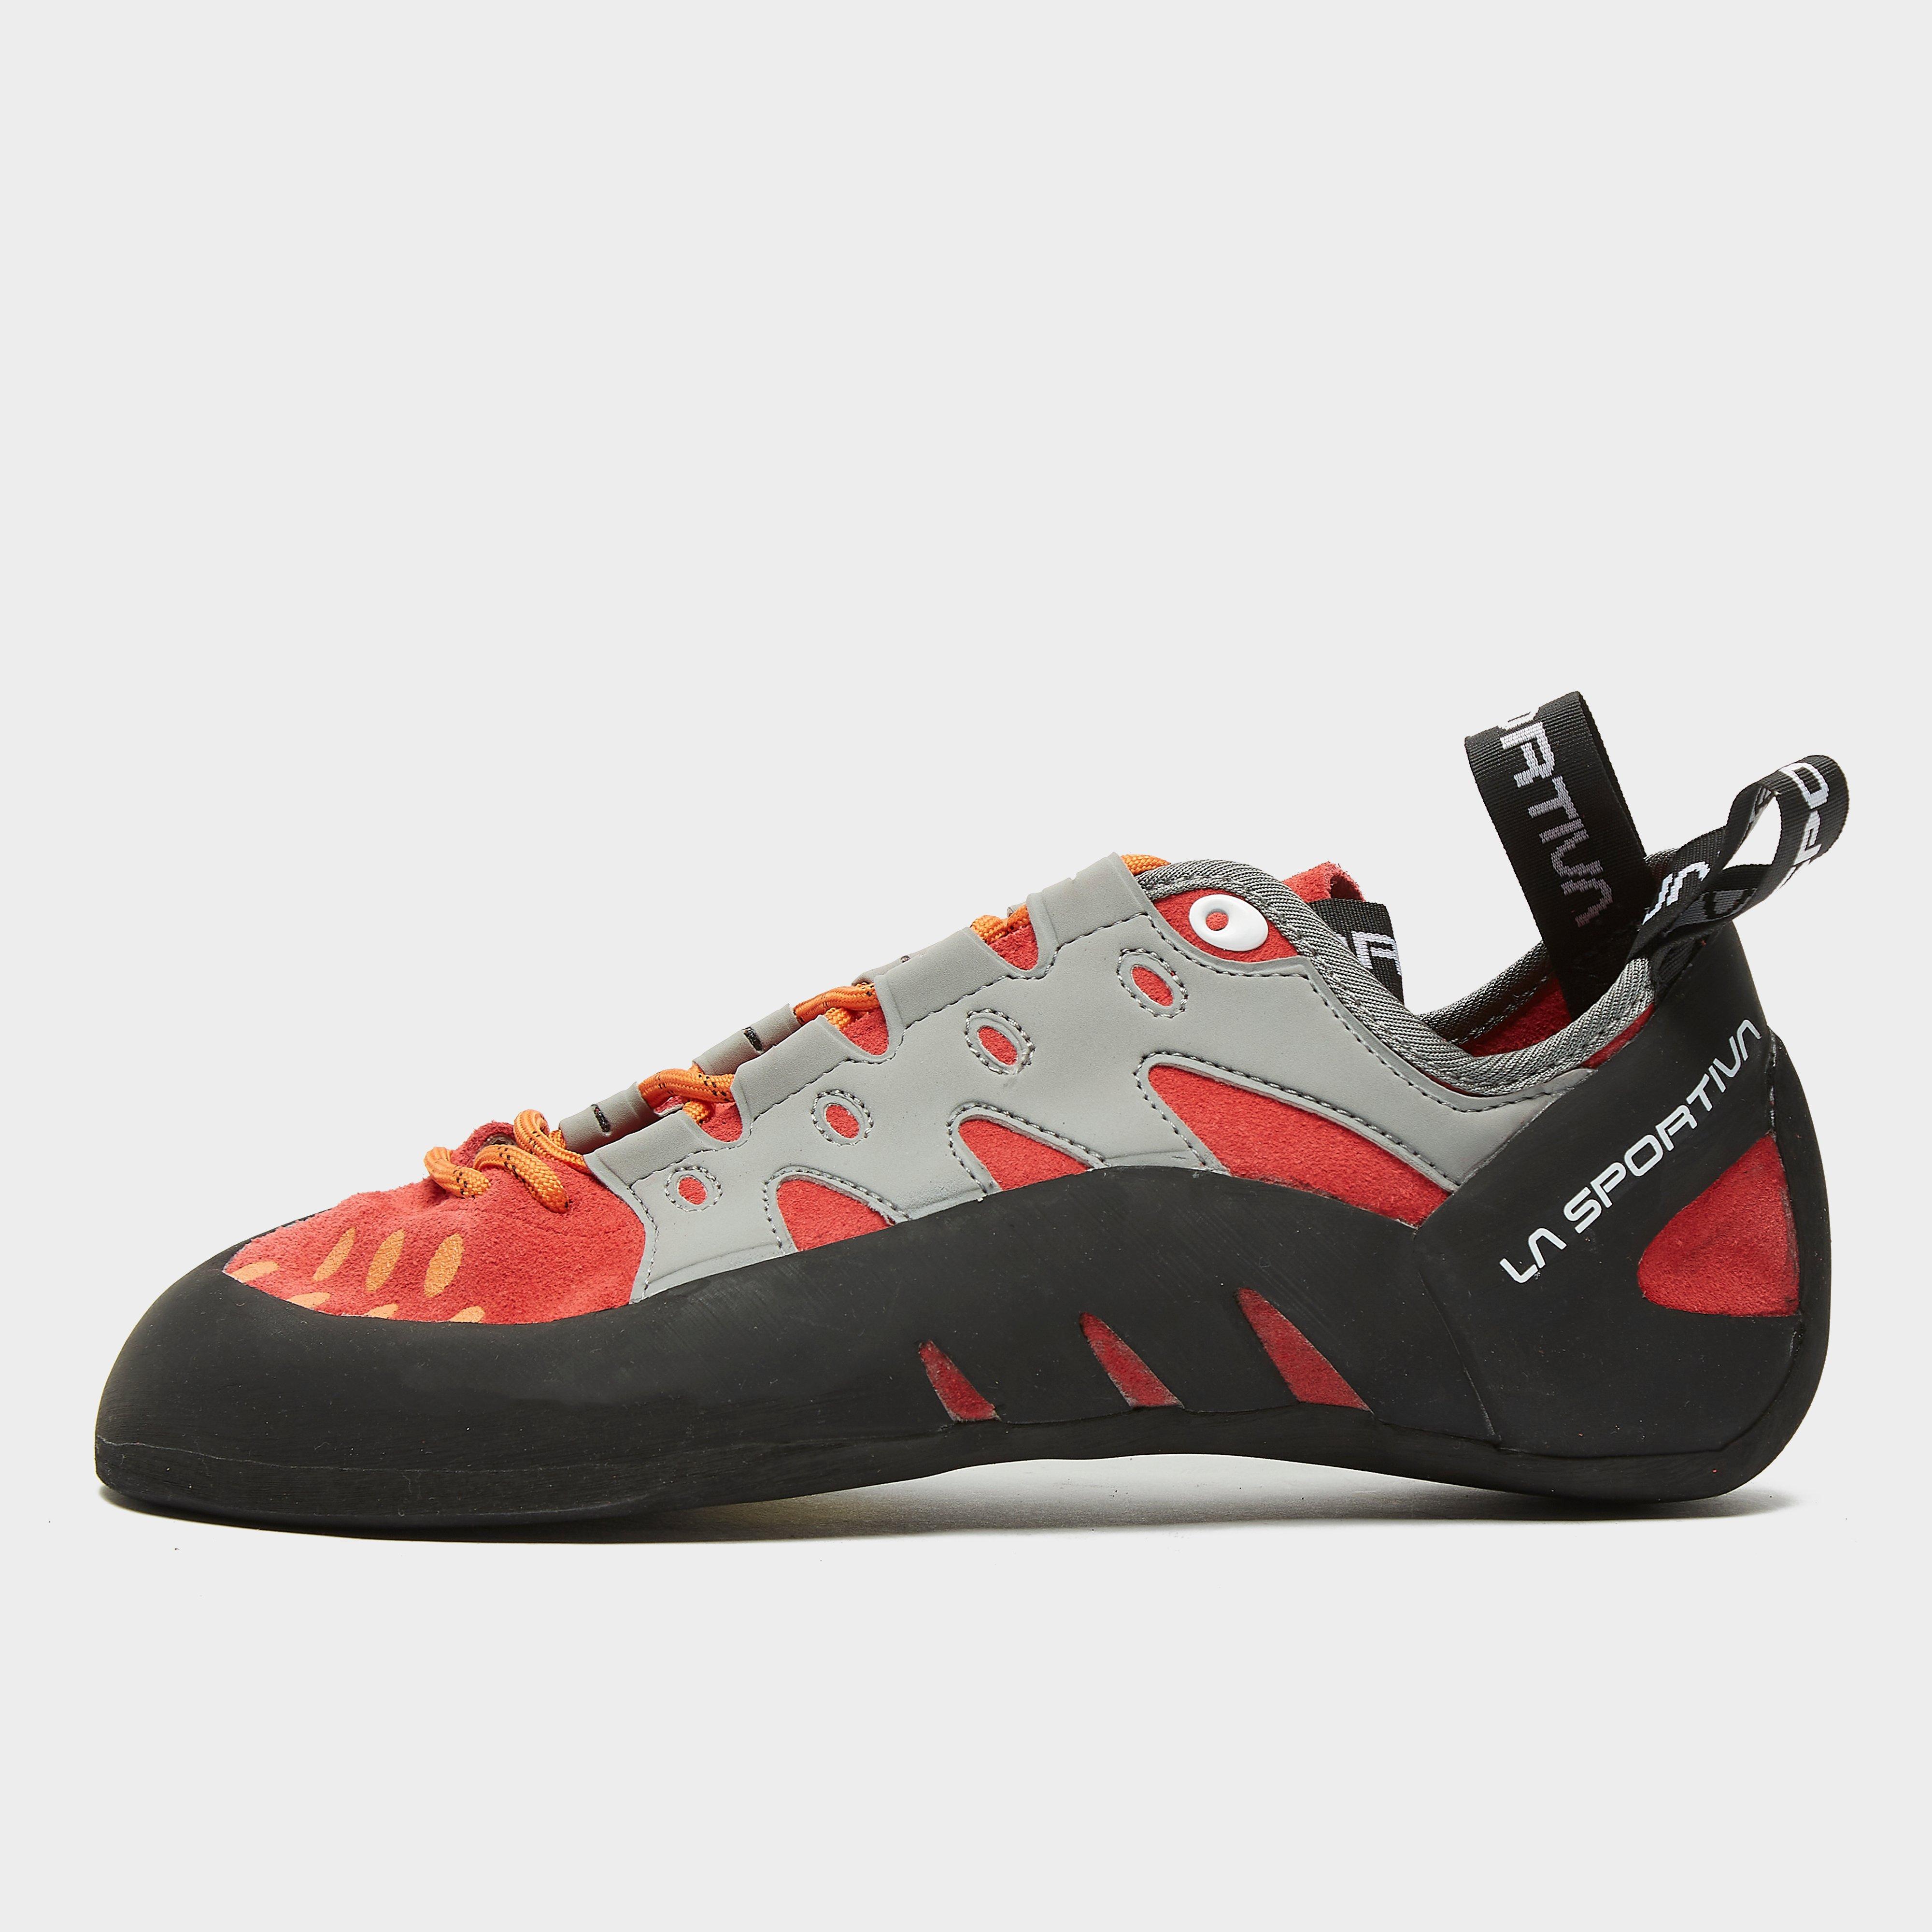 La Sportiva Mens Tarantulace Climbing Shoes - Red/tarantulace  Red/tarantulace